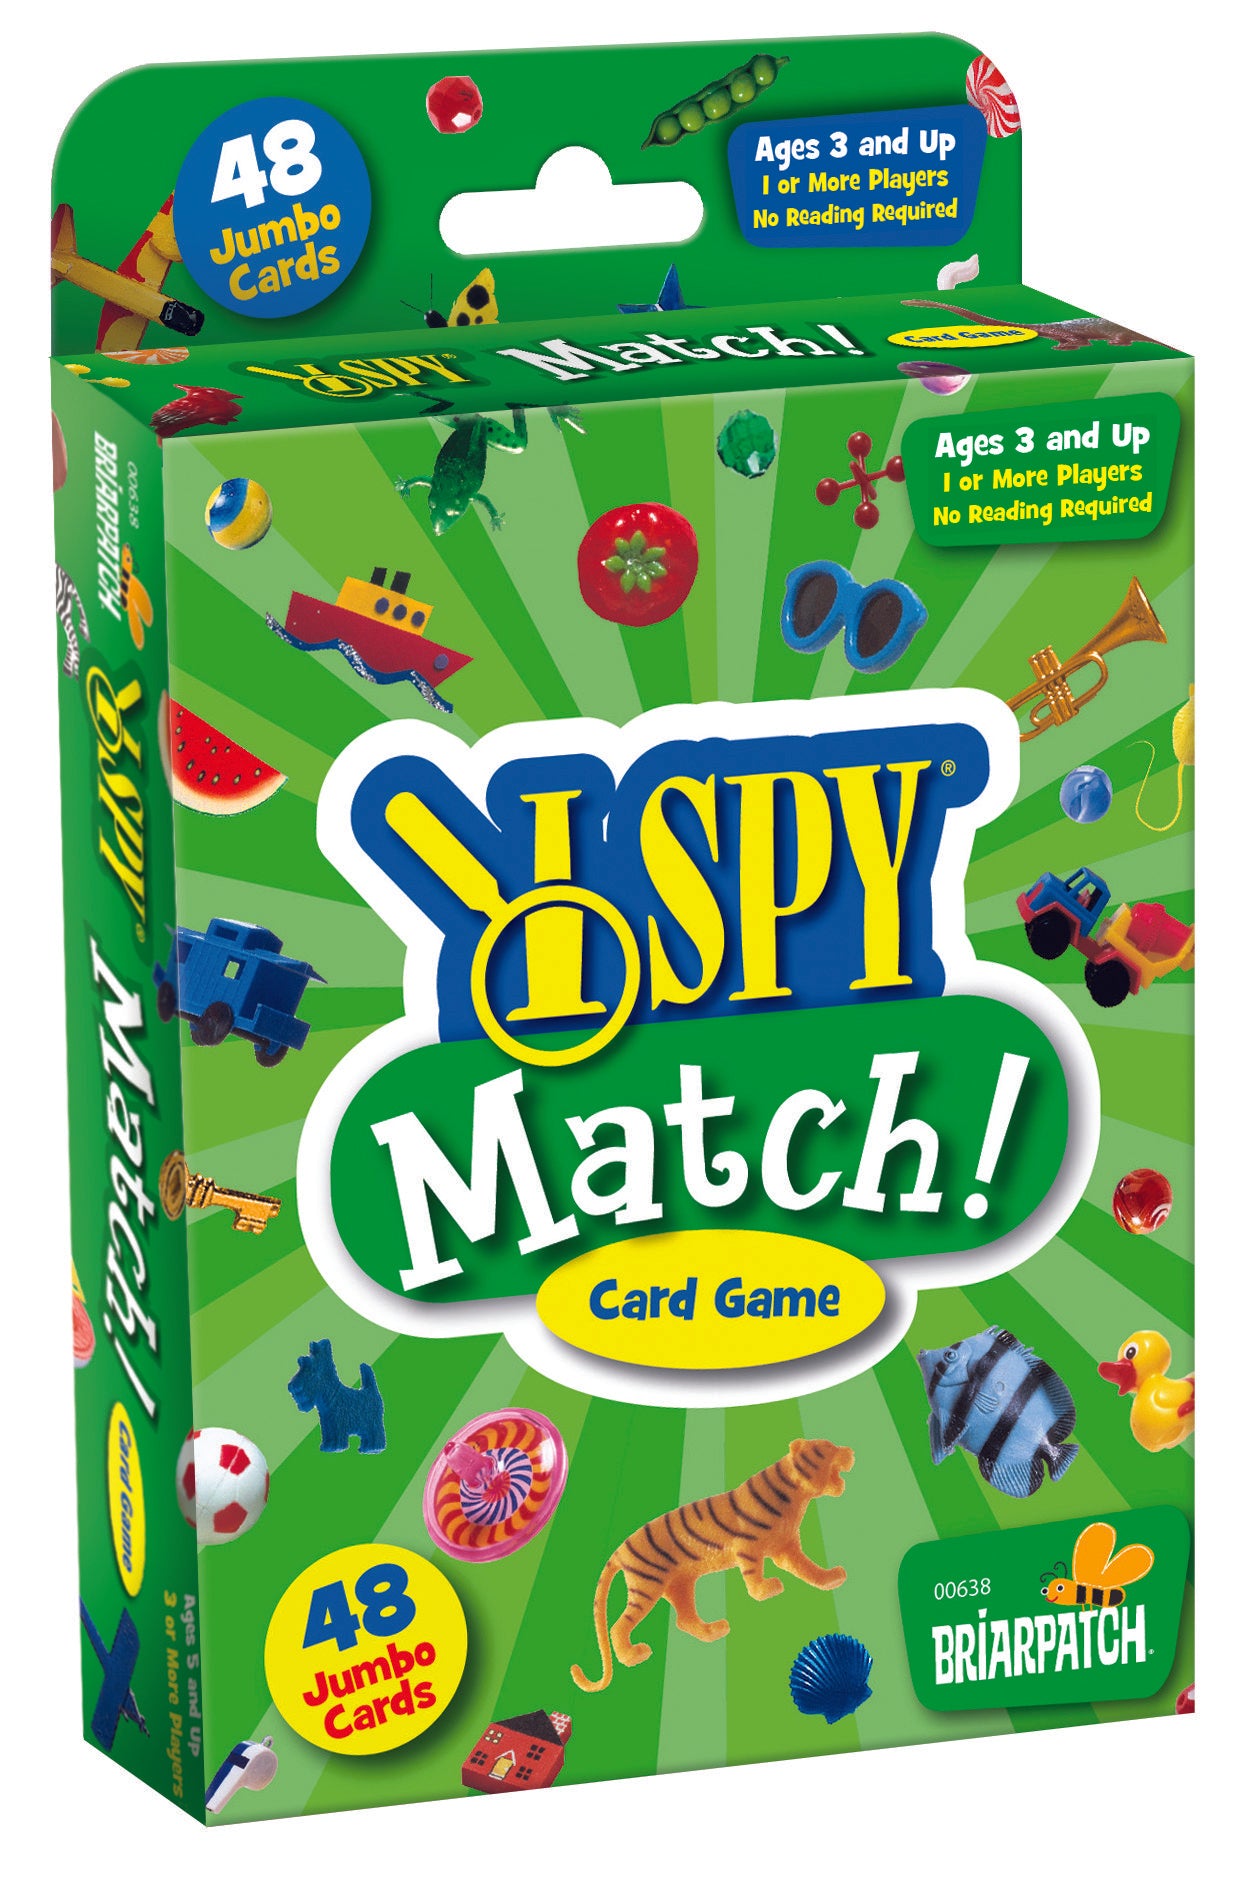 I Spy Match! Card Game